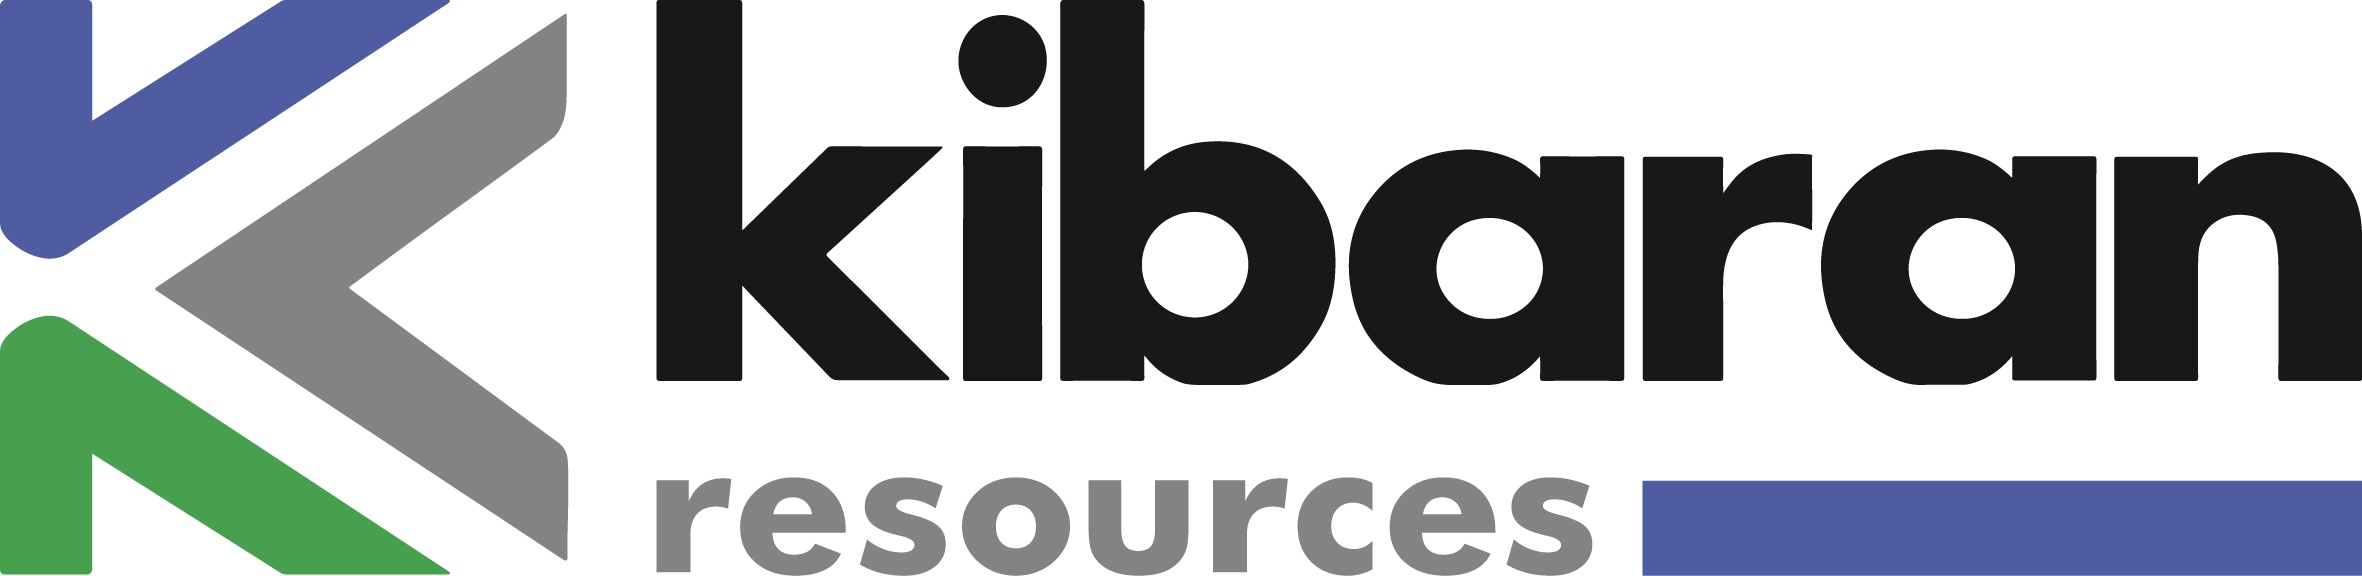 Kibaran_Resources_Logo - Feb15 - Final no border